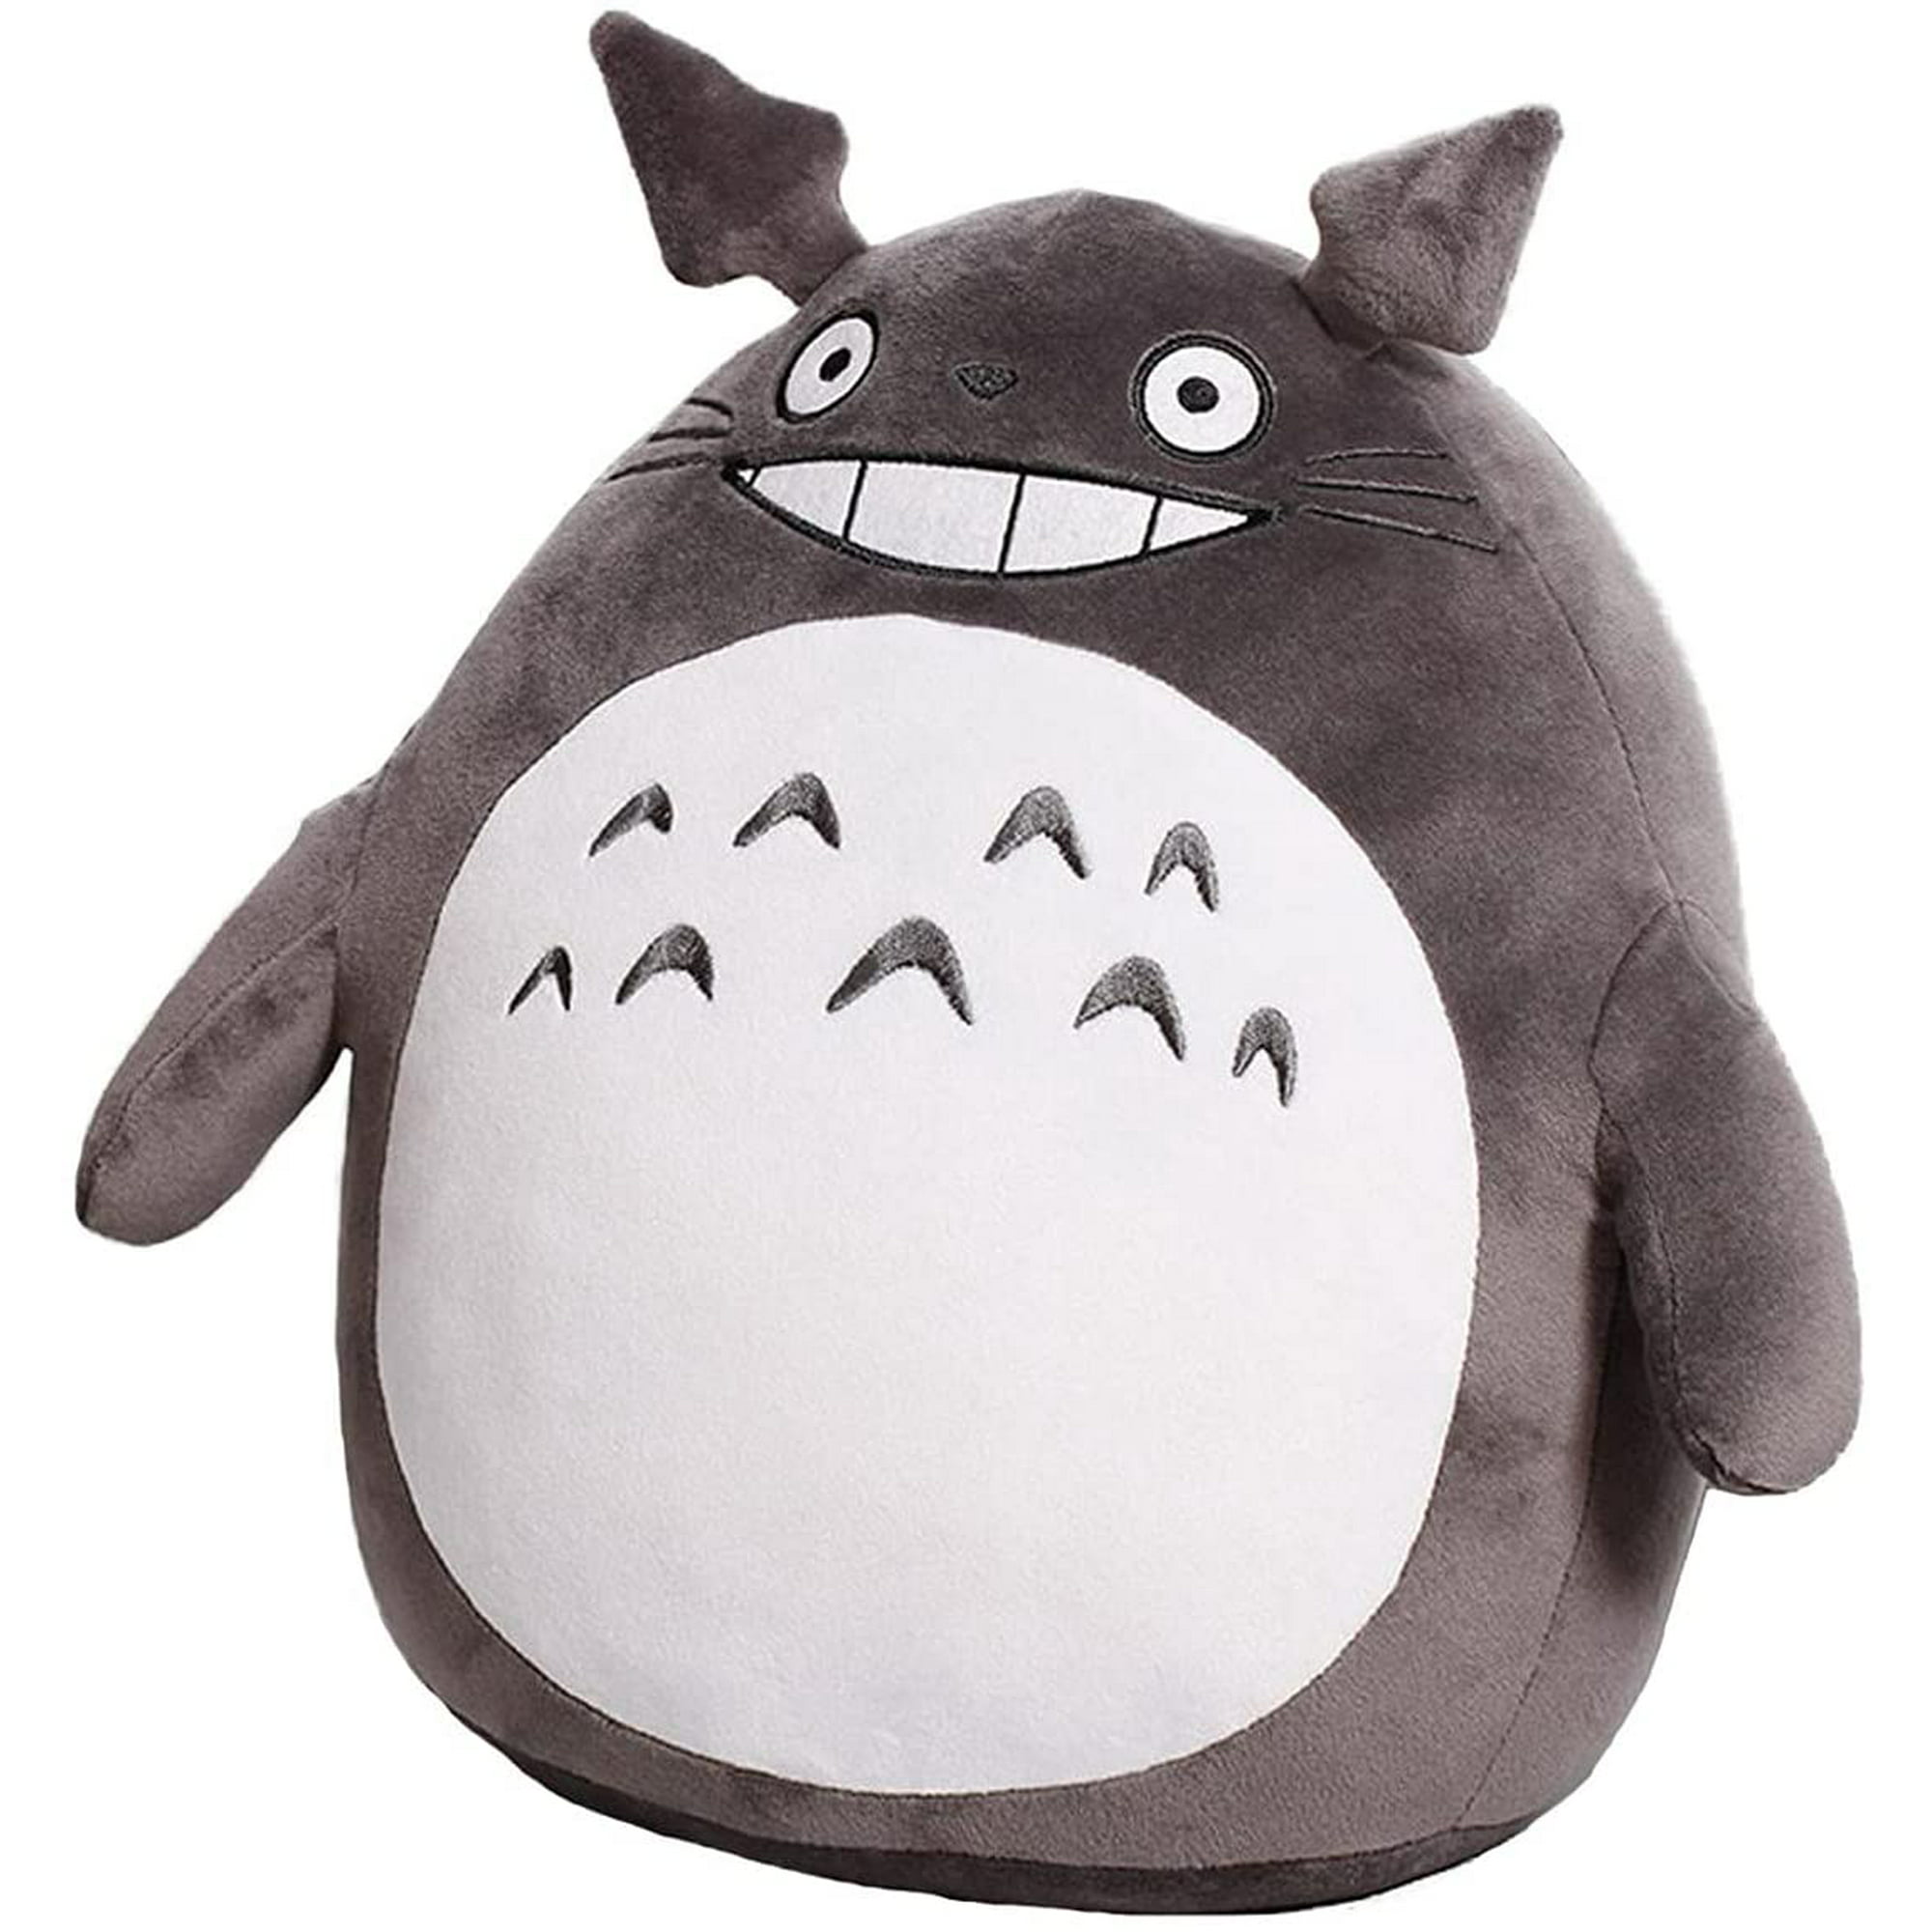 Totoro Stuffed Animal Plush In Gray 15 7 My Neighbor Totoro Plush Stuffed Toy Cute Soft Pillow Children Gift Walmart Canada